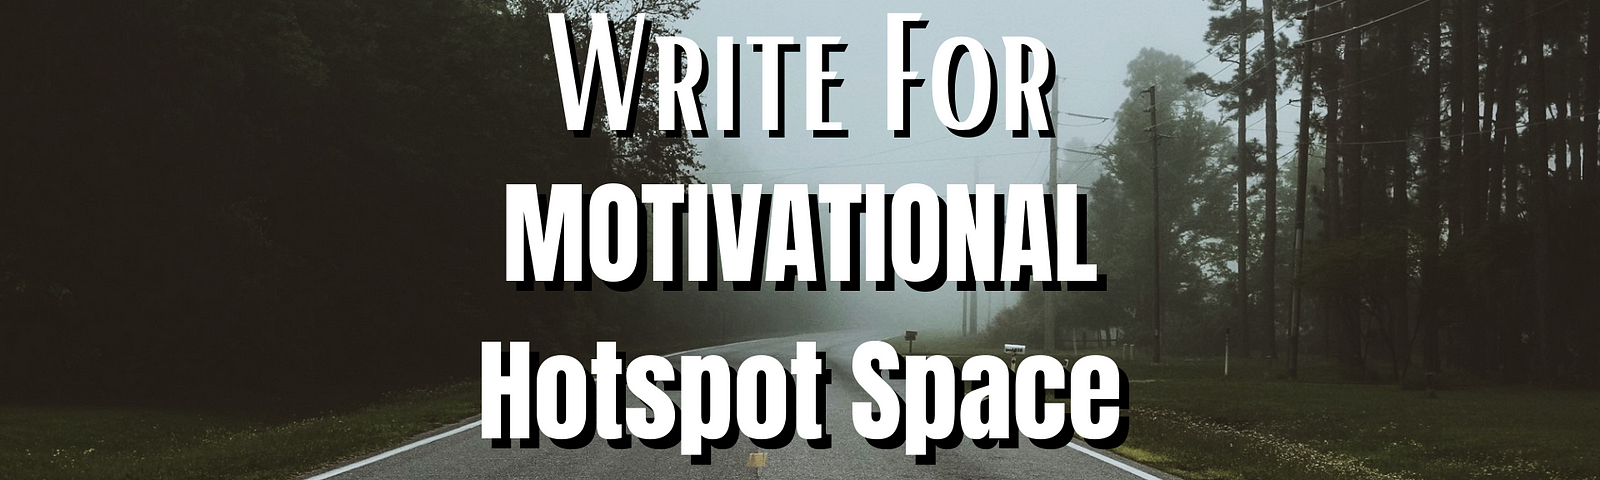 writing for the motivational hotspot space publicationon medium